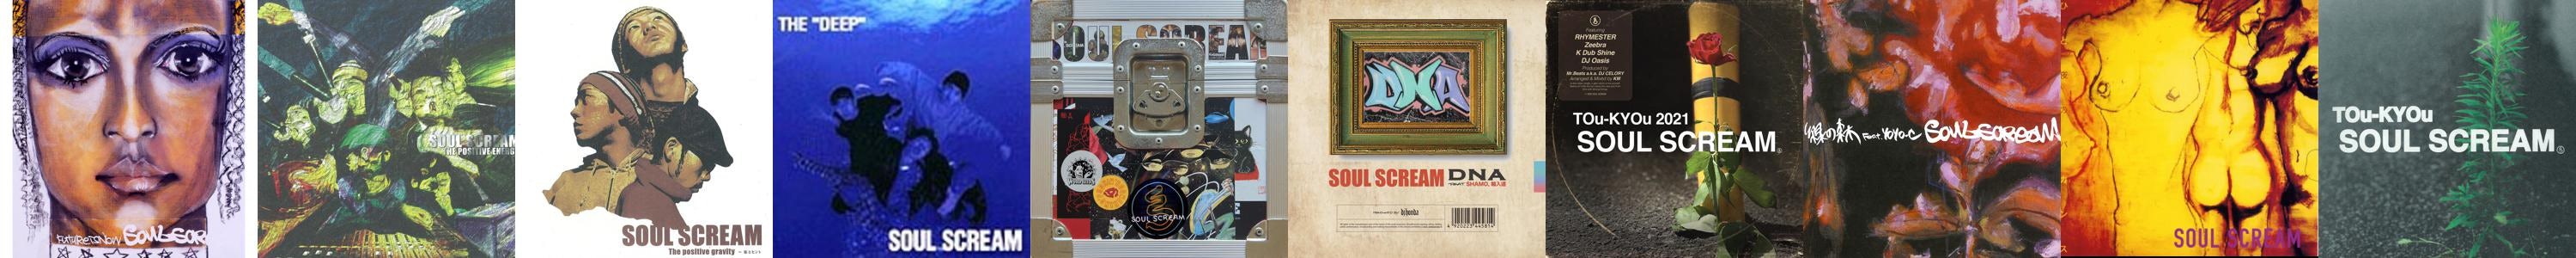 SOUL SCREAM Store: Official Merch & Vinyl